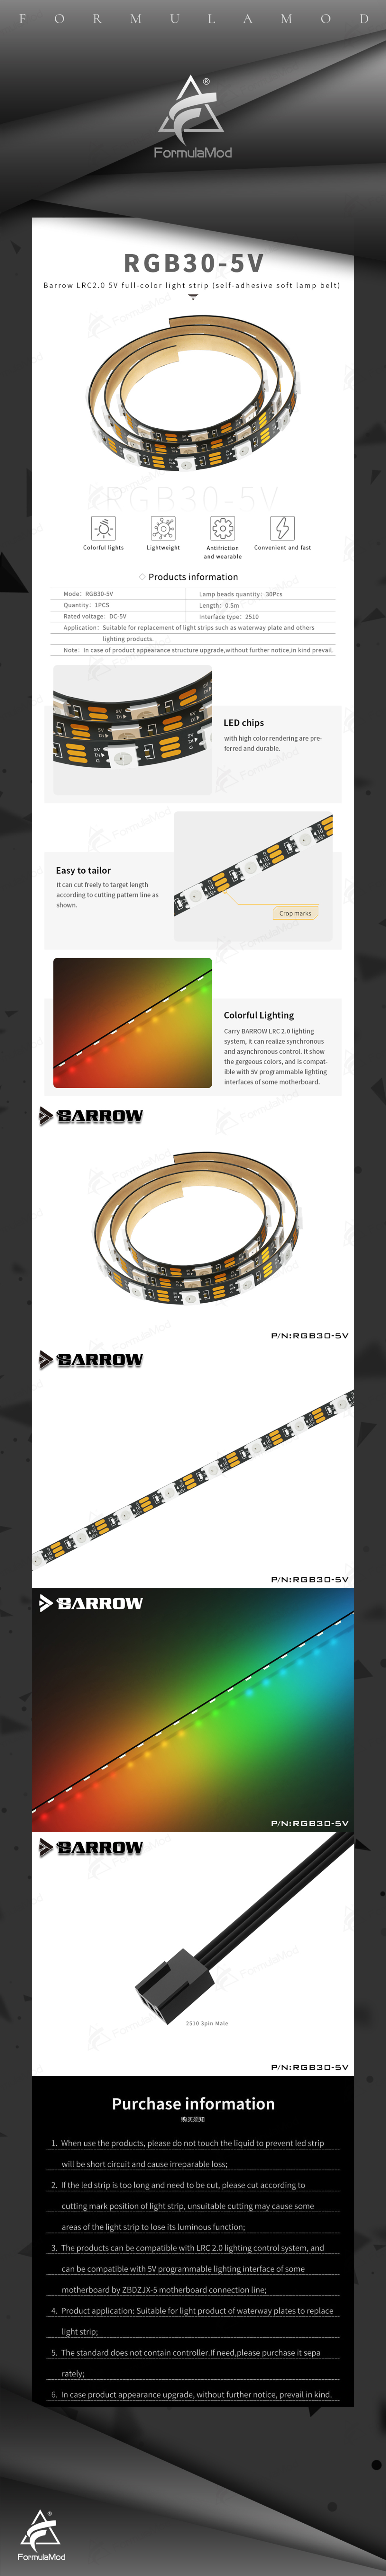 Barrow LRC2.0(5v 3pin) LED Reserovir Lighting Stripsfull-color Light Strip Self-adhesive Soft Lamp Belt 0.5m, RGB30-5V  